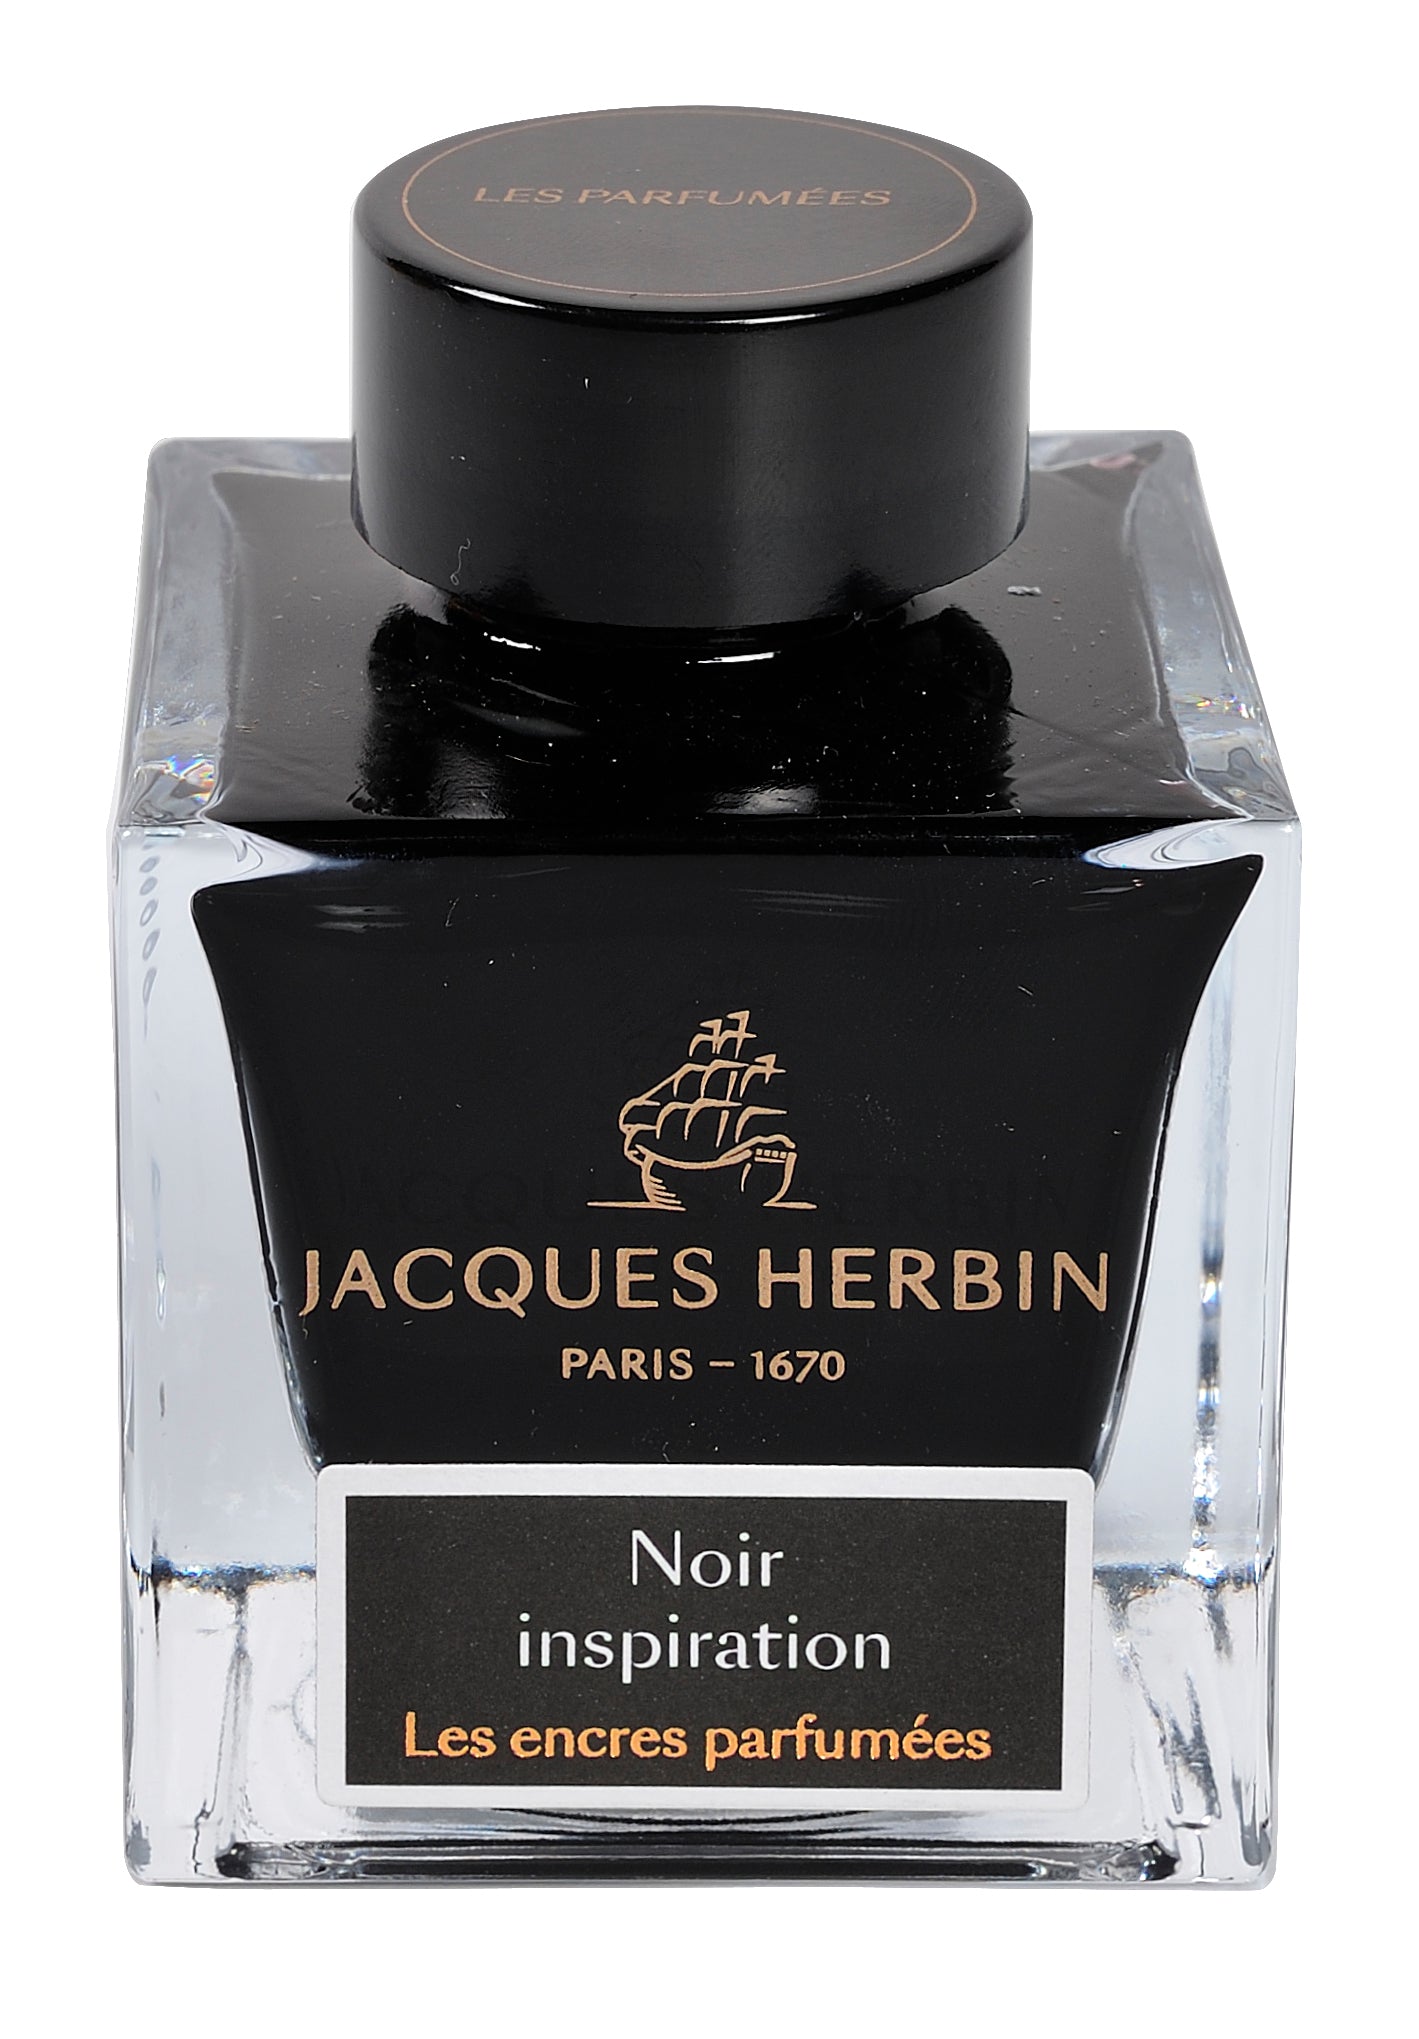 Herbin parfümierte Tinte - Noir inspiration (schwarz)